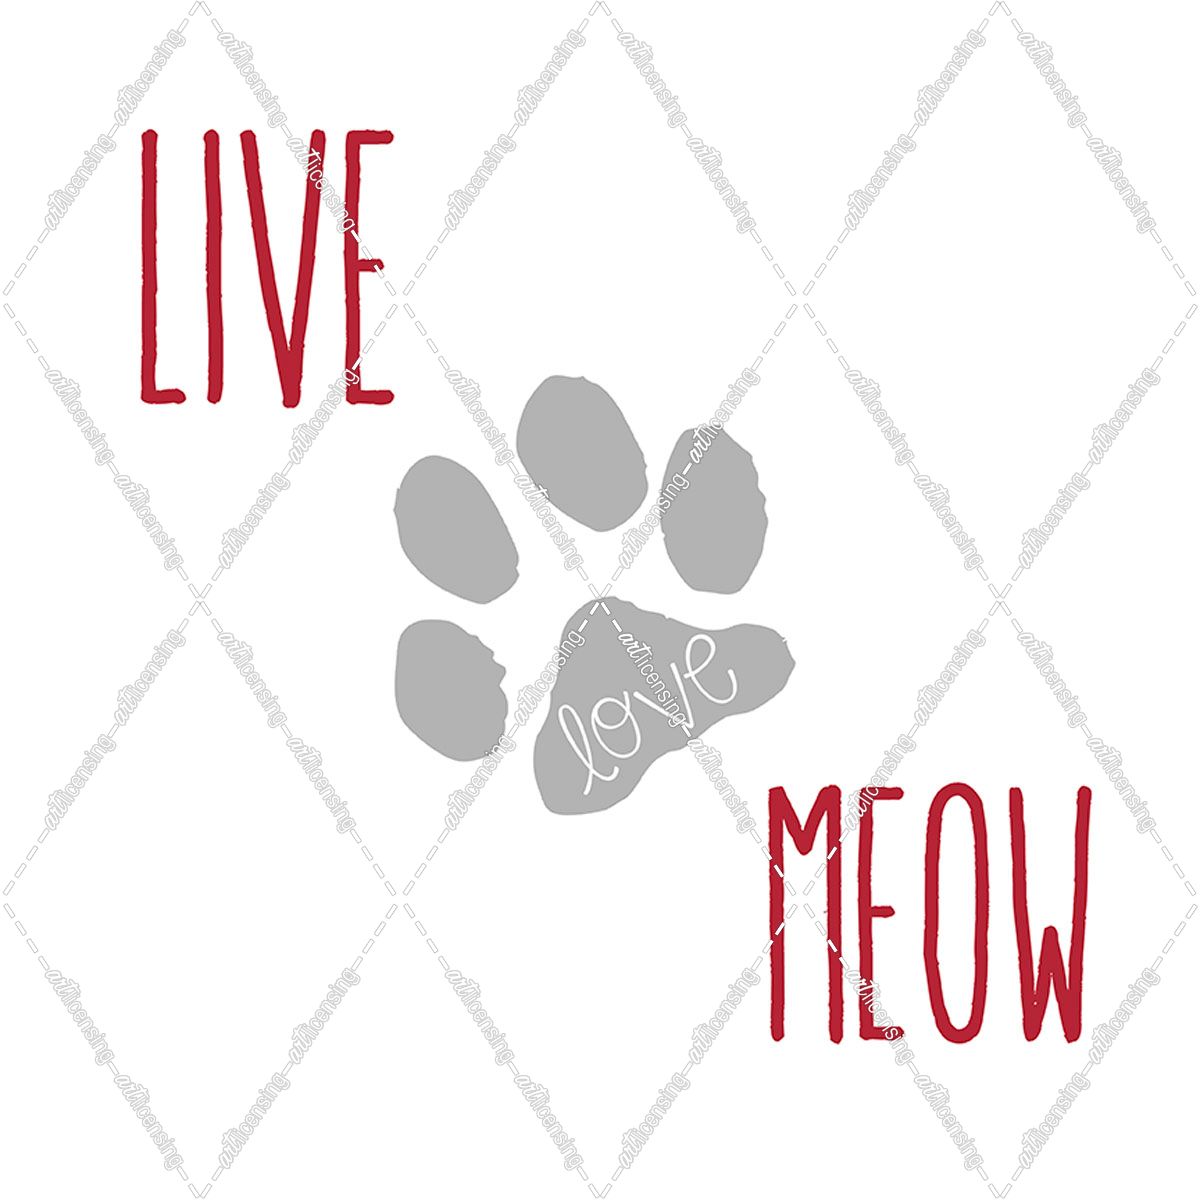 Live Love Meow 2